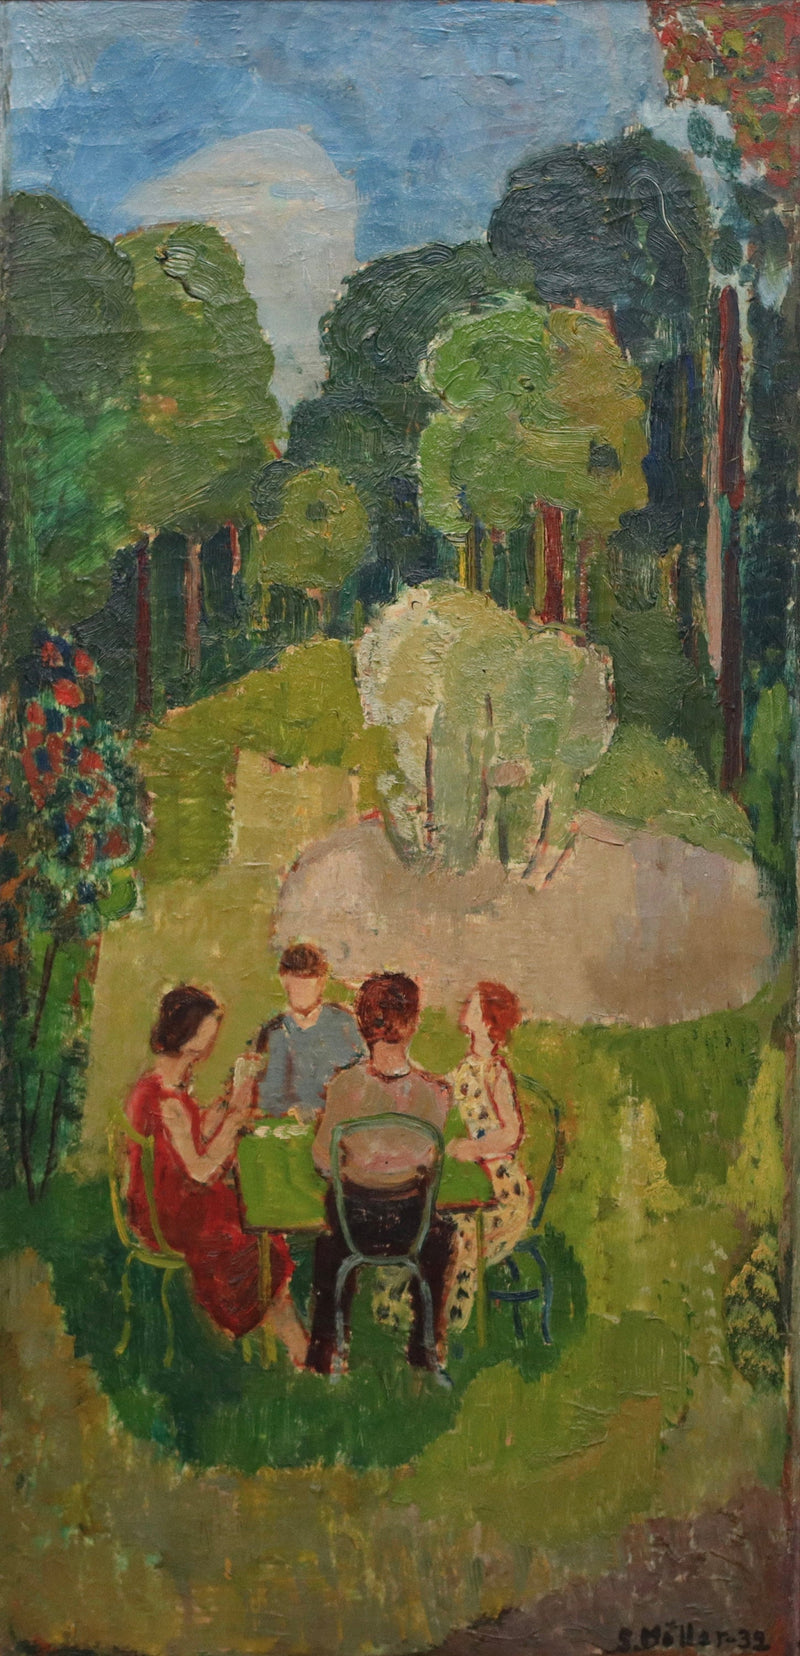 Vintage Landscape Oil Painting by S Möller from Sweden 1932